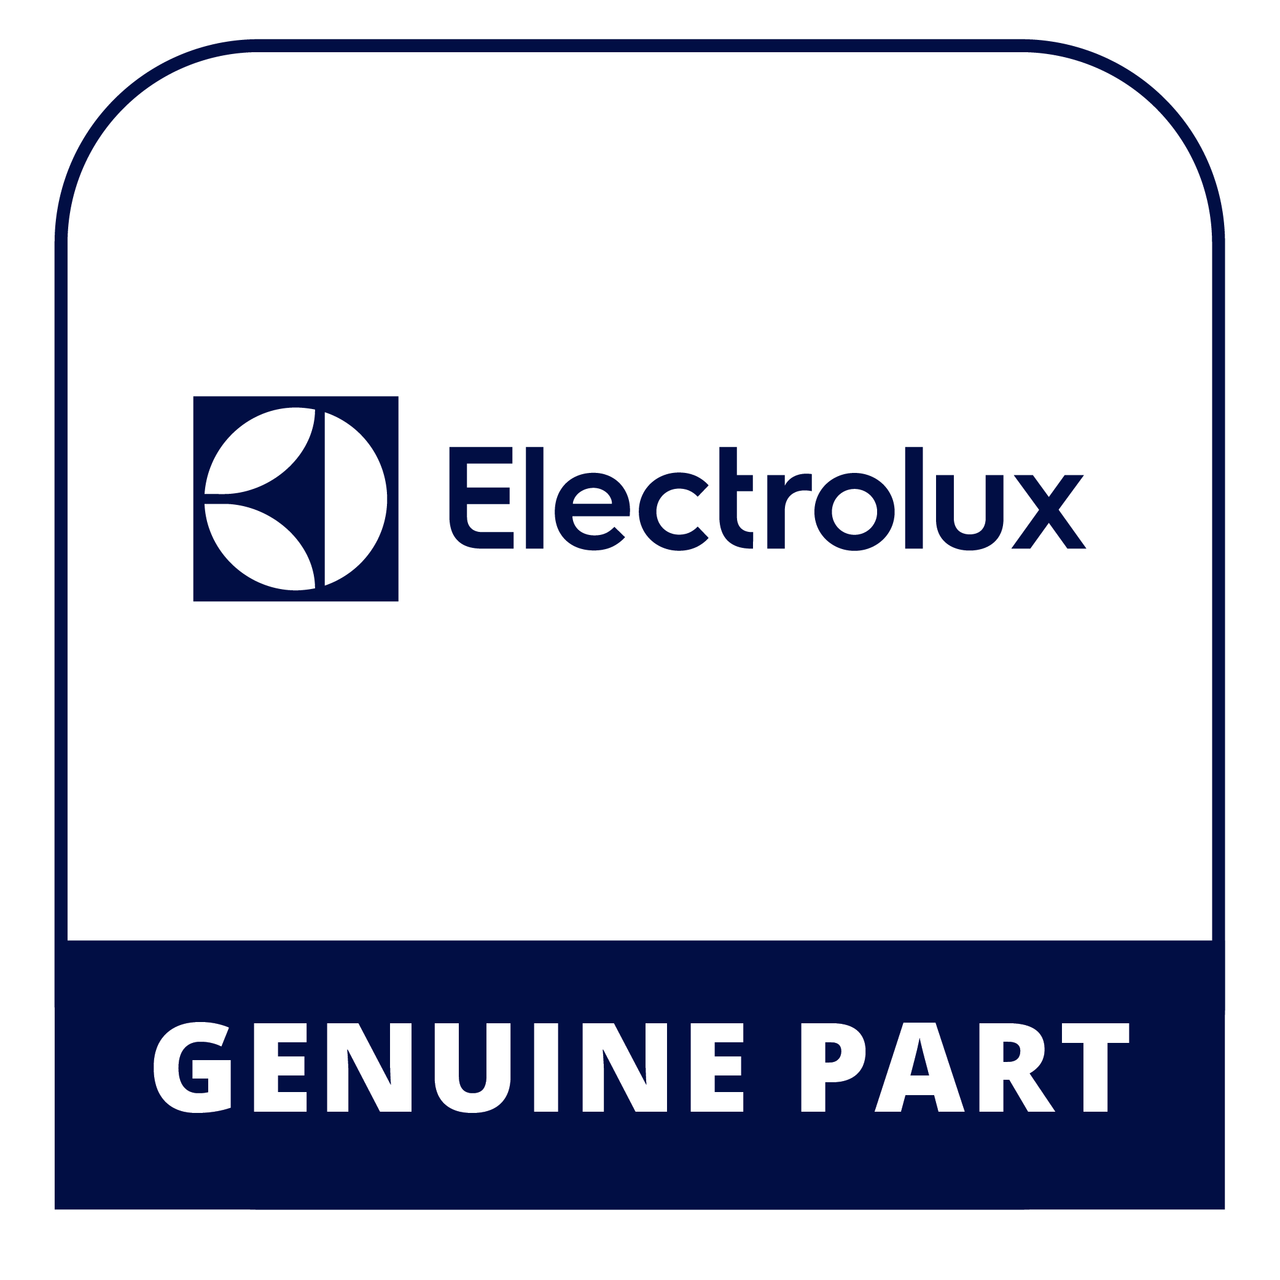 Frigidaire - Electrolux 316408905 Dsp Drawer - Genuine Electrolux Part